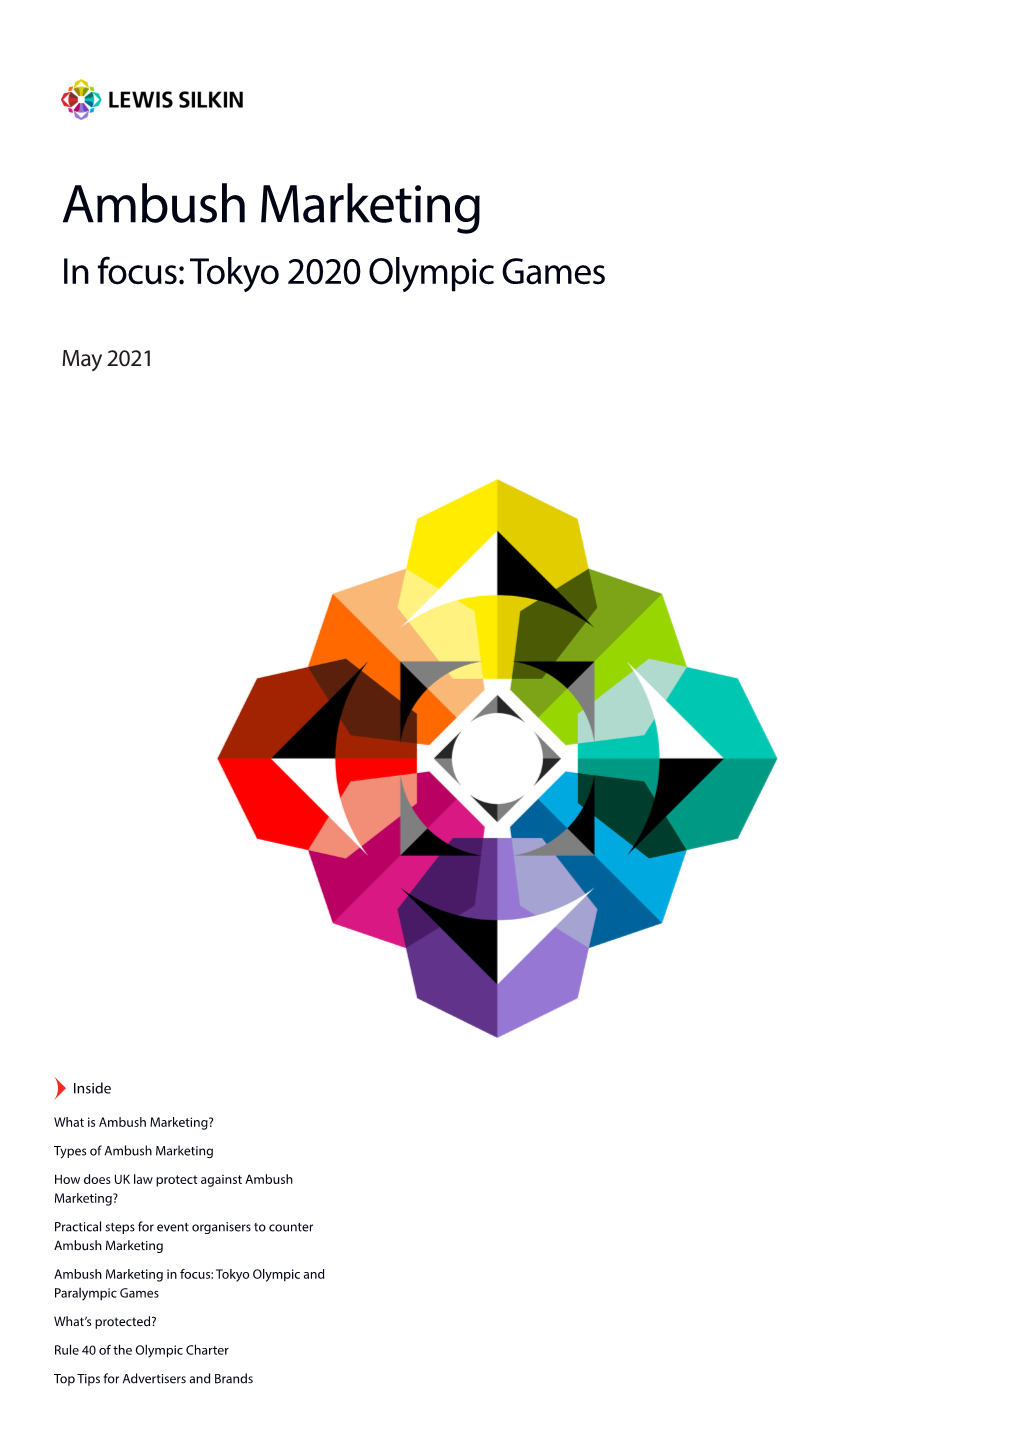 Ambush Marketing in Focus: Tokyo 2020 Olympic Games